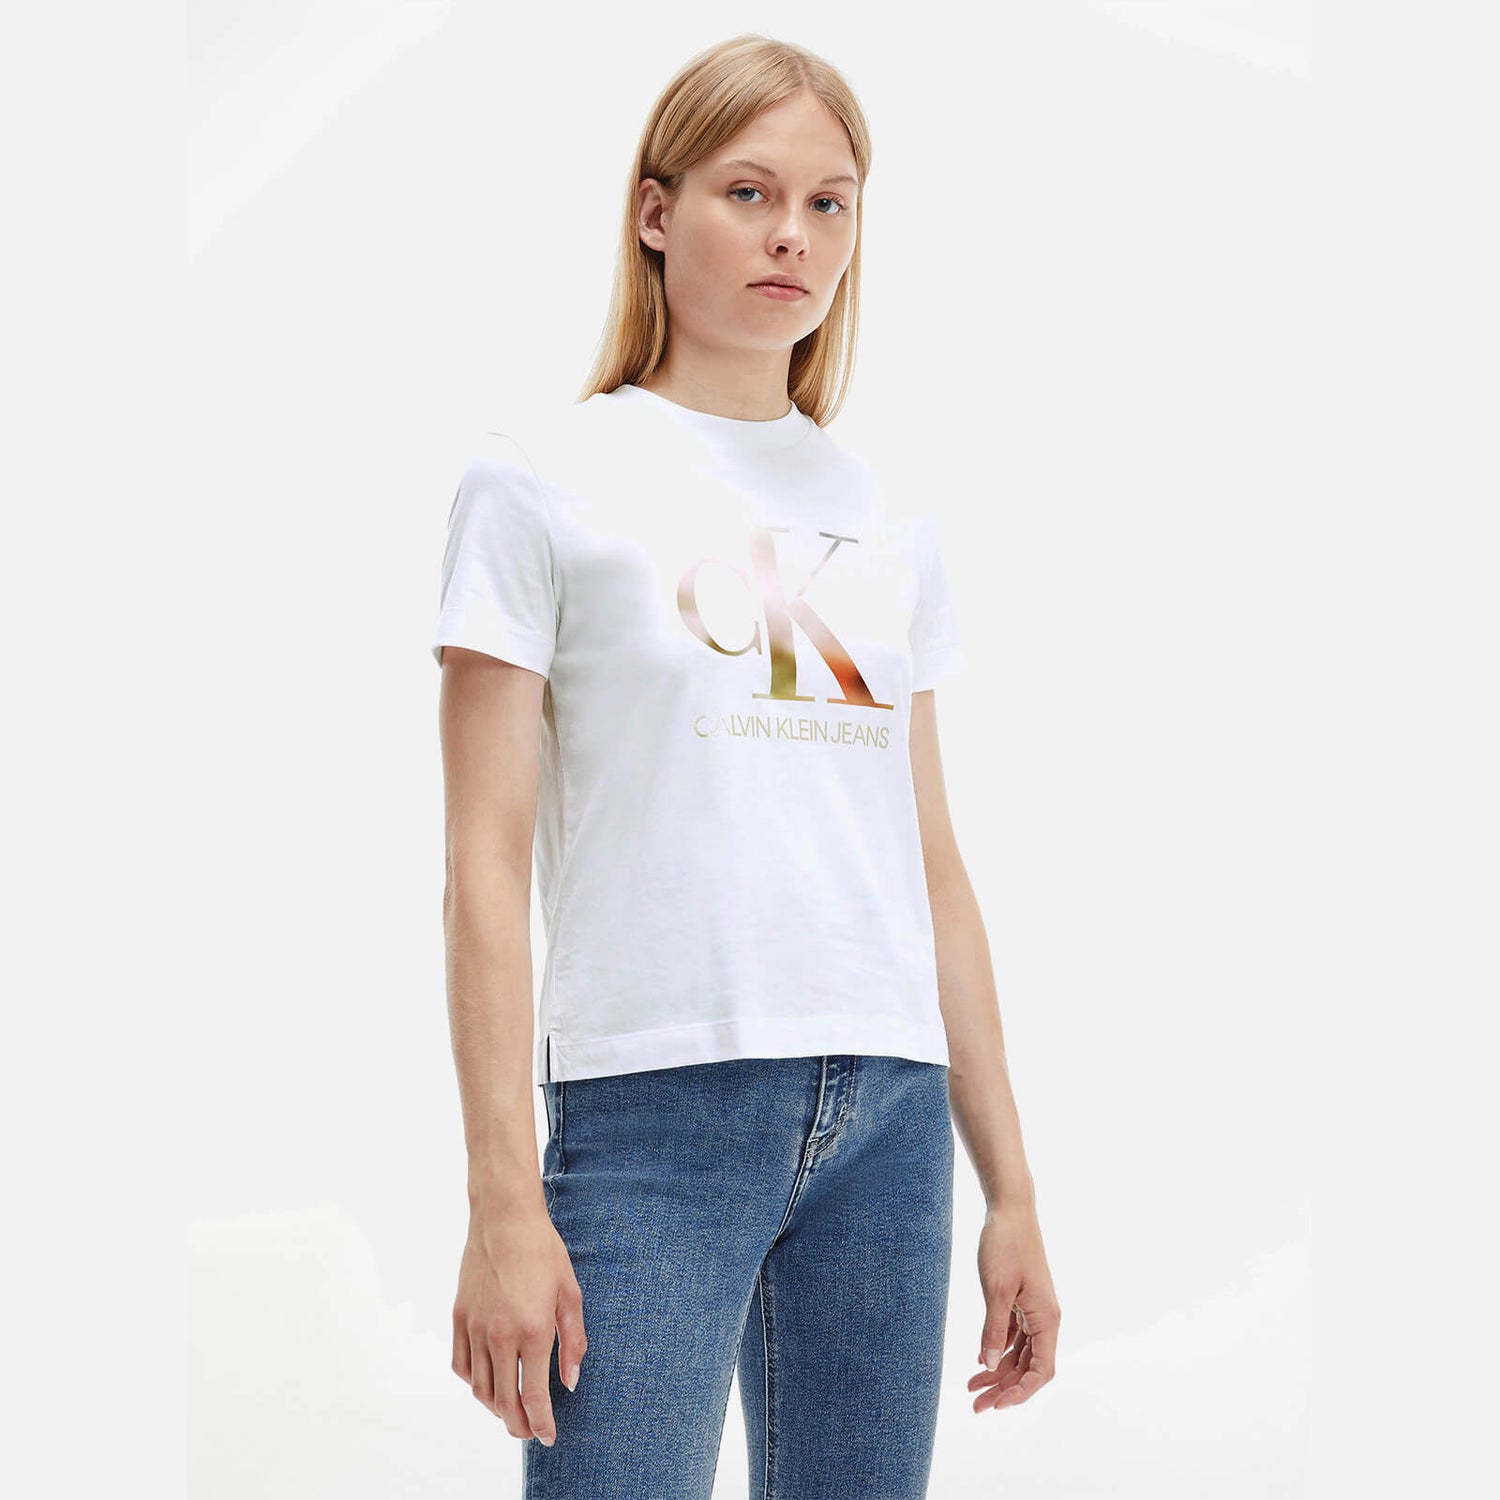 Calvin Klein Jeans Women's Organic Cotton Satin Bonded Blurred Ck T-Shirt - Bright White - S